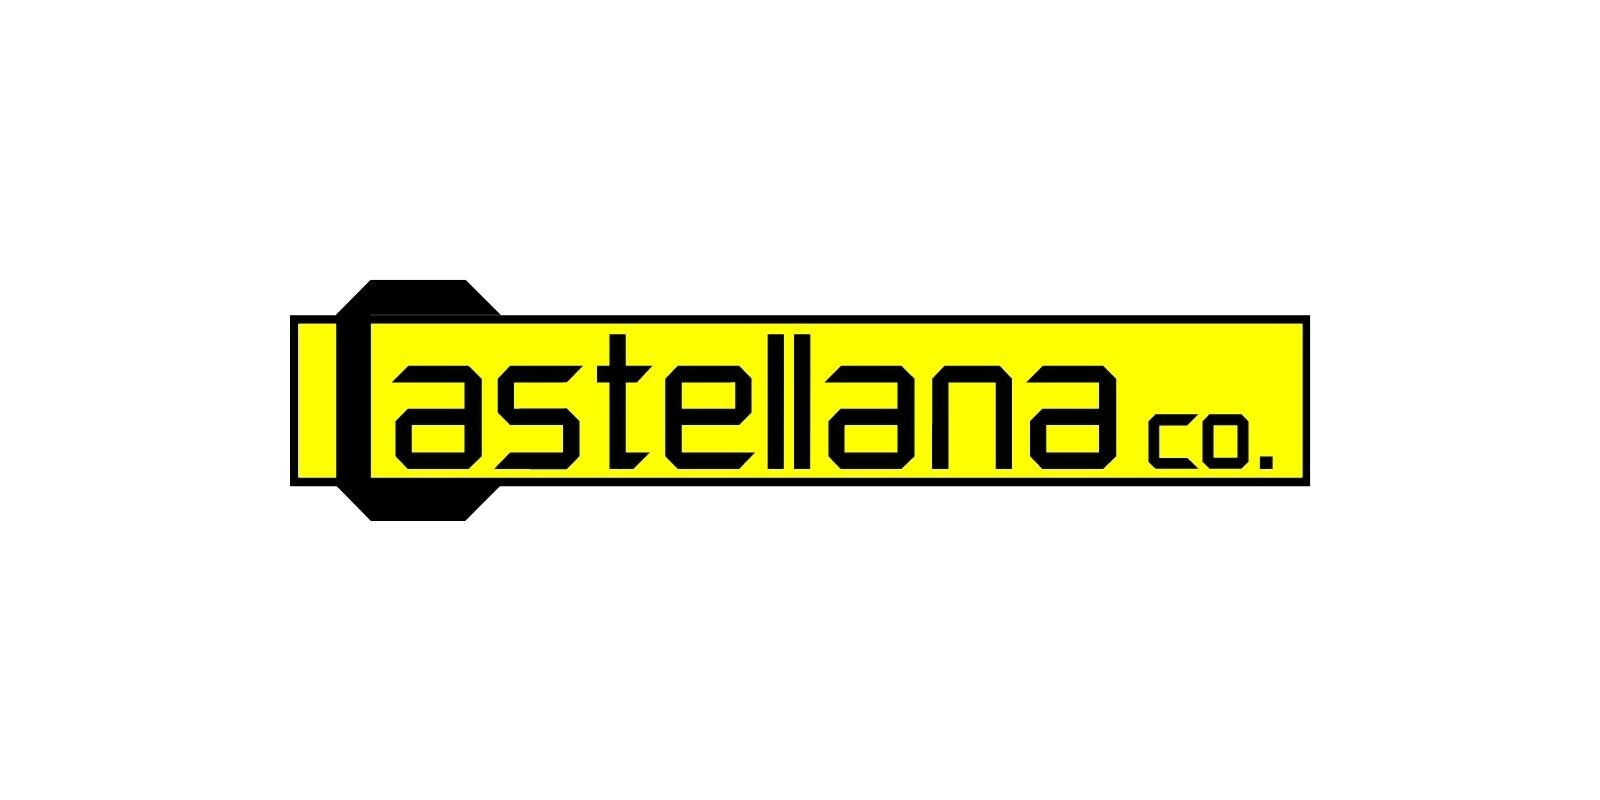 Castellana Co.